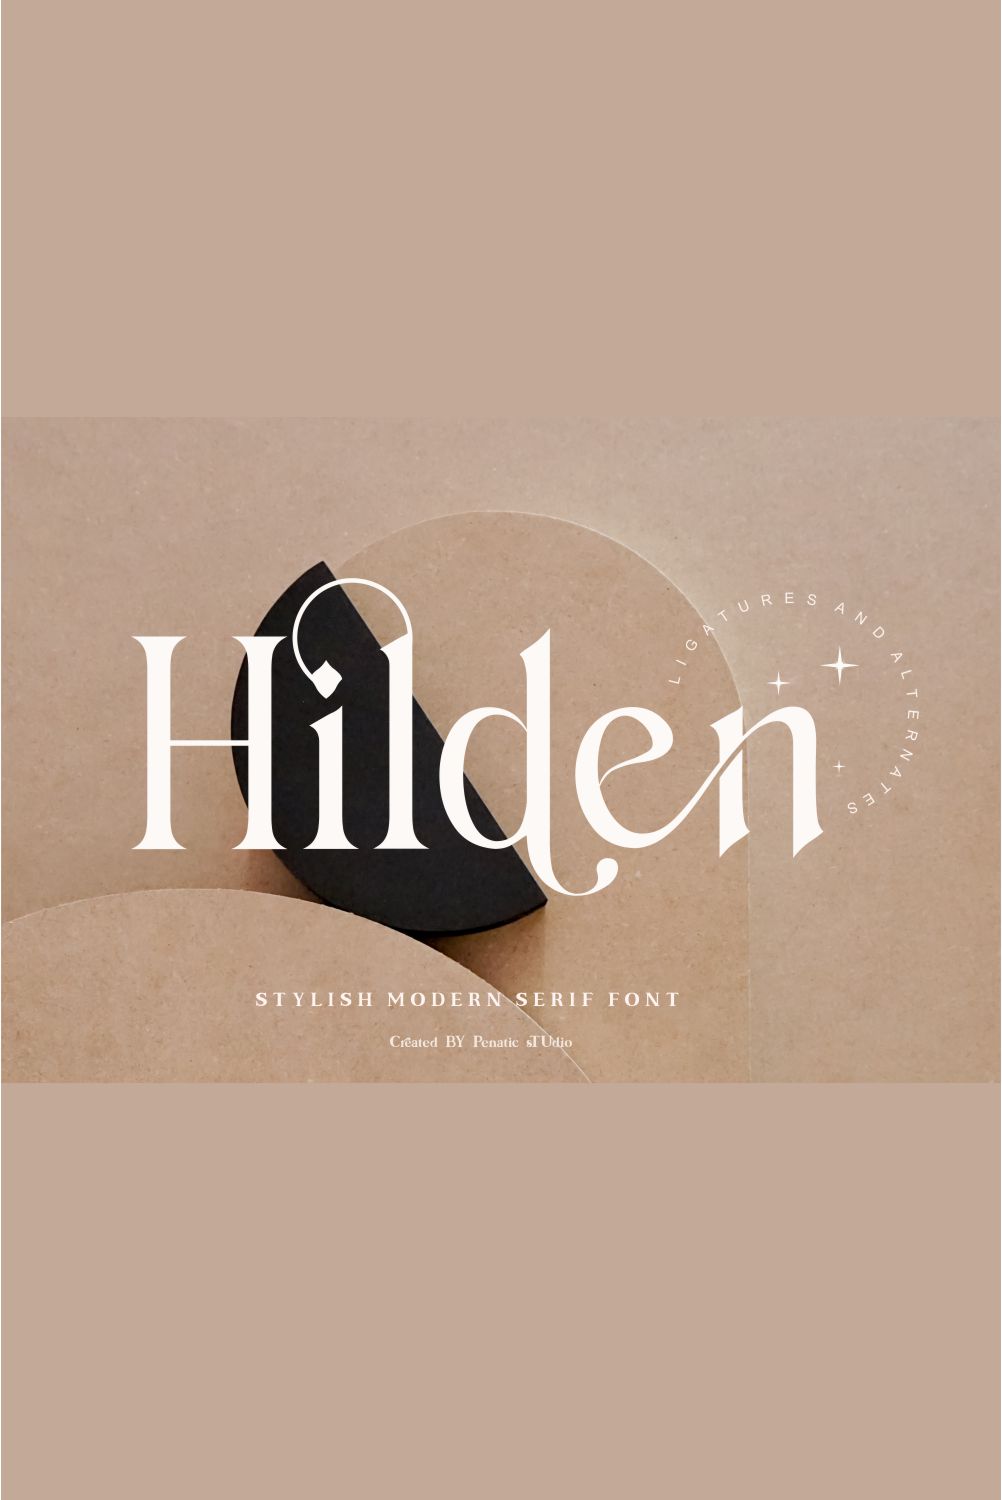 Hilden - stylish modern serif font pinterest preview image.